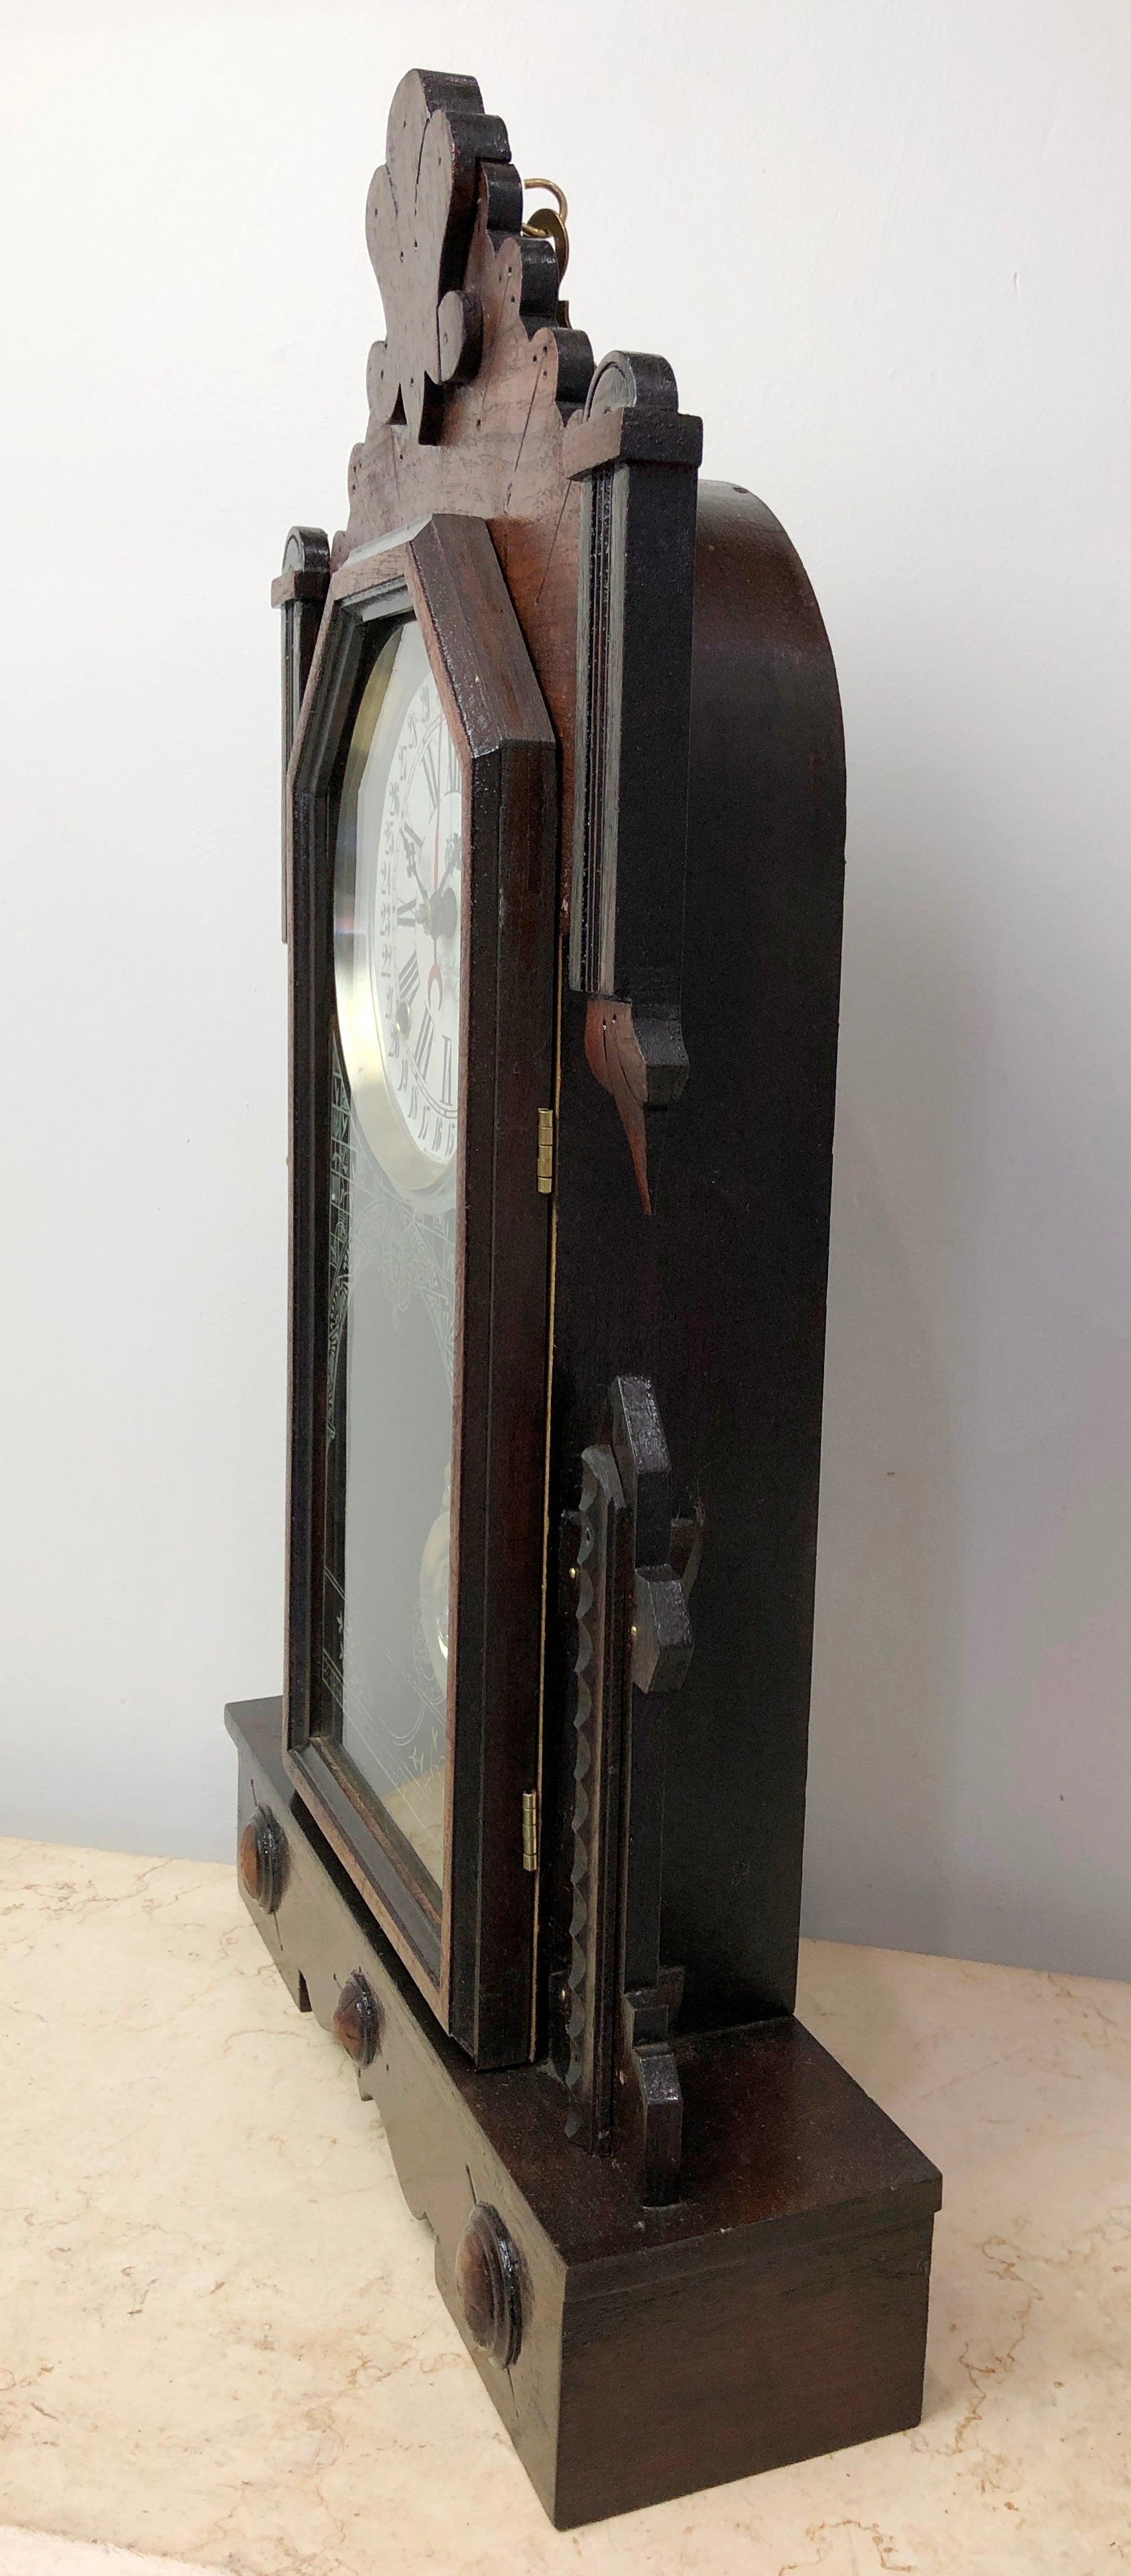 Antique Waterbury 31 Day Calendar Mantel Clock | eXibit collection